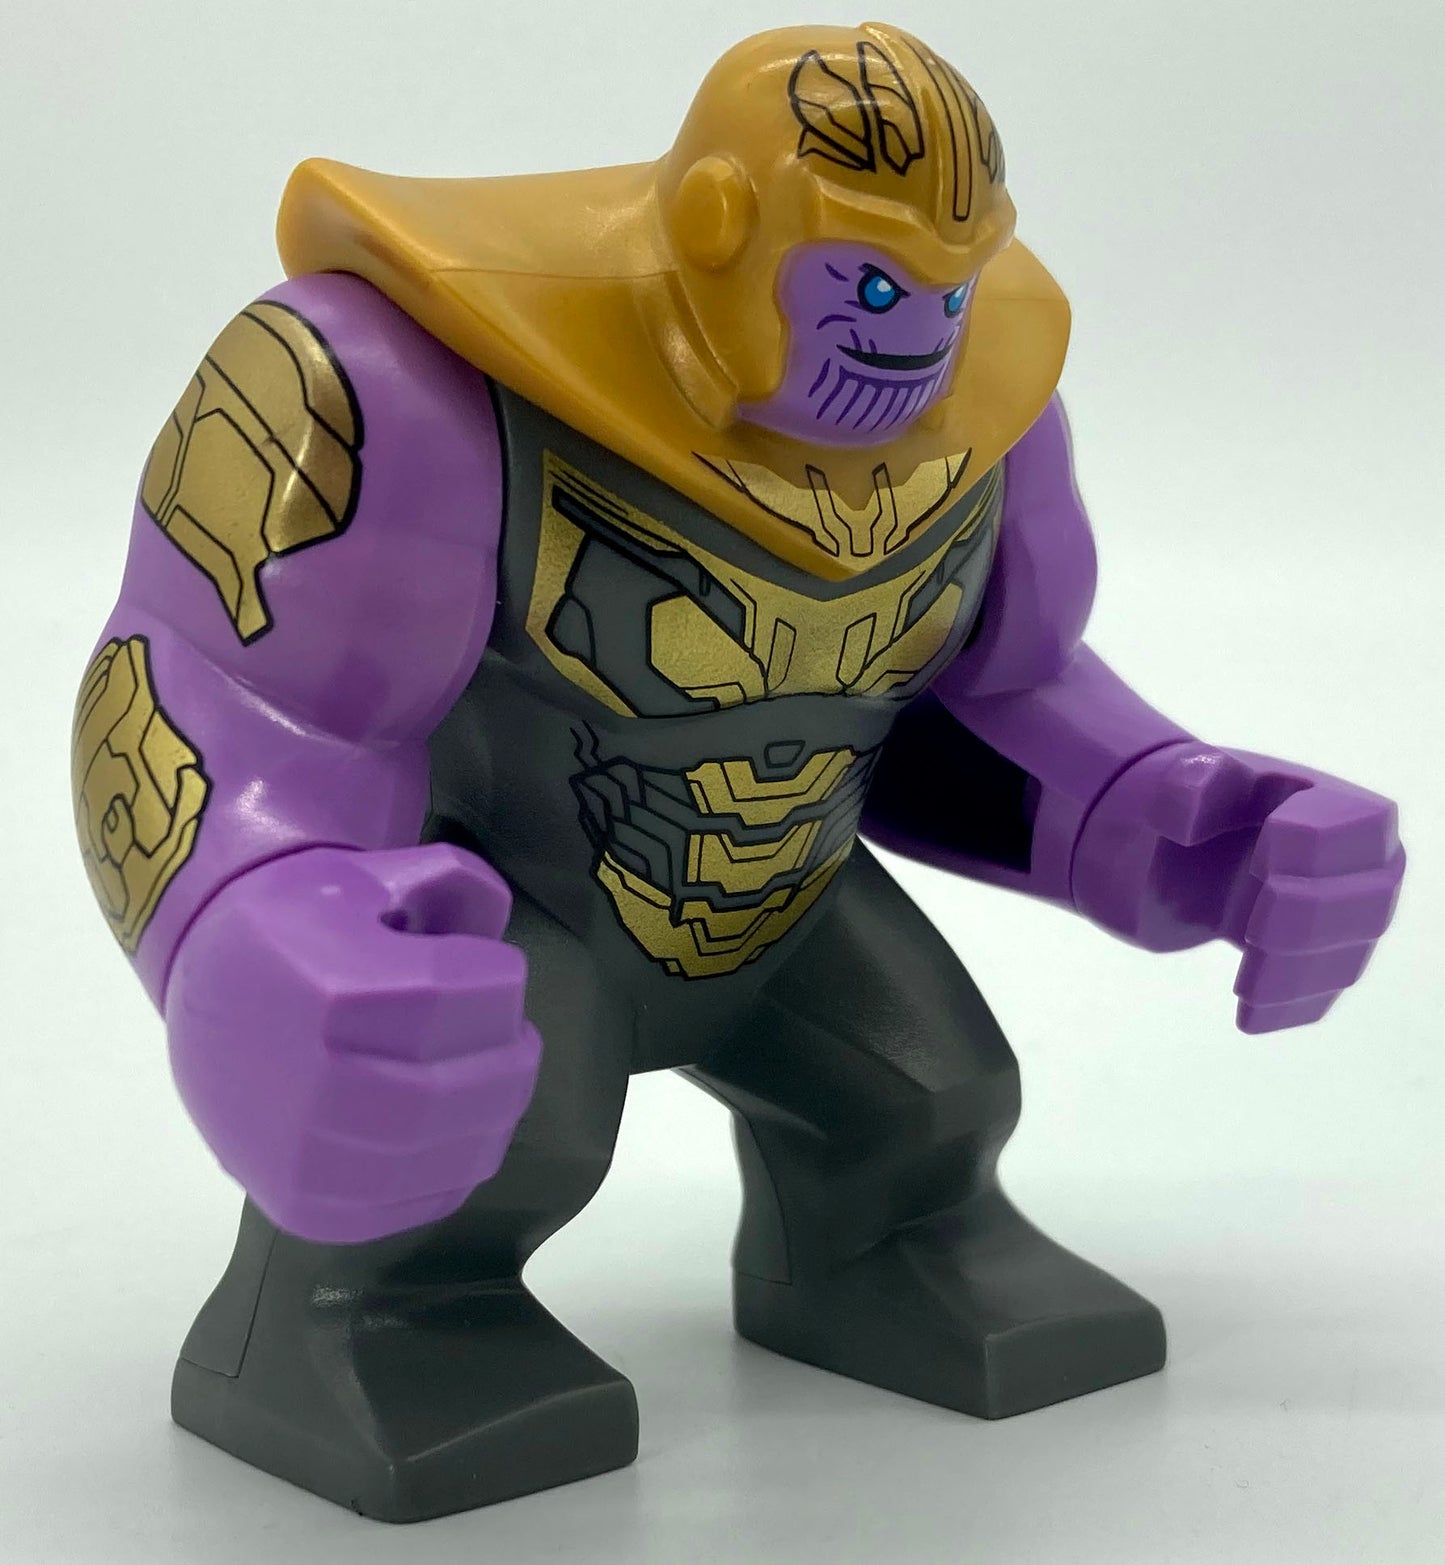 Thanos - Large Figure, Medium Lavender Arms Printed, Dark Bluish Gray and Gold Armor, Pearl Gold Helmet